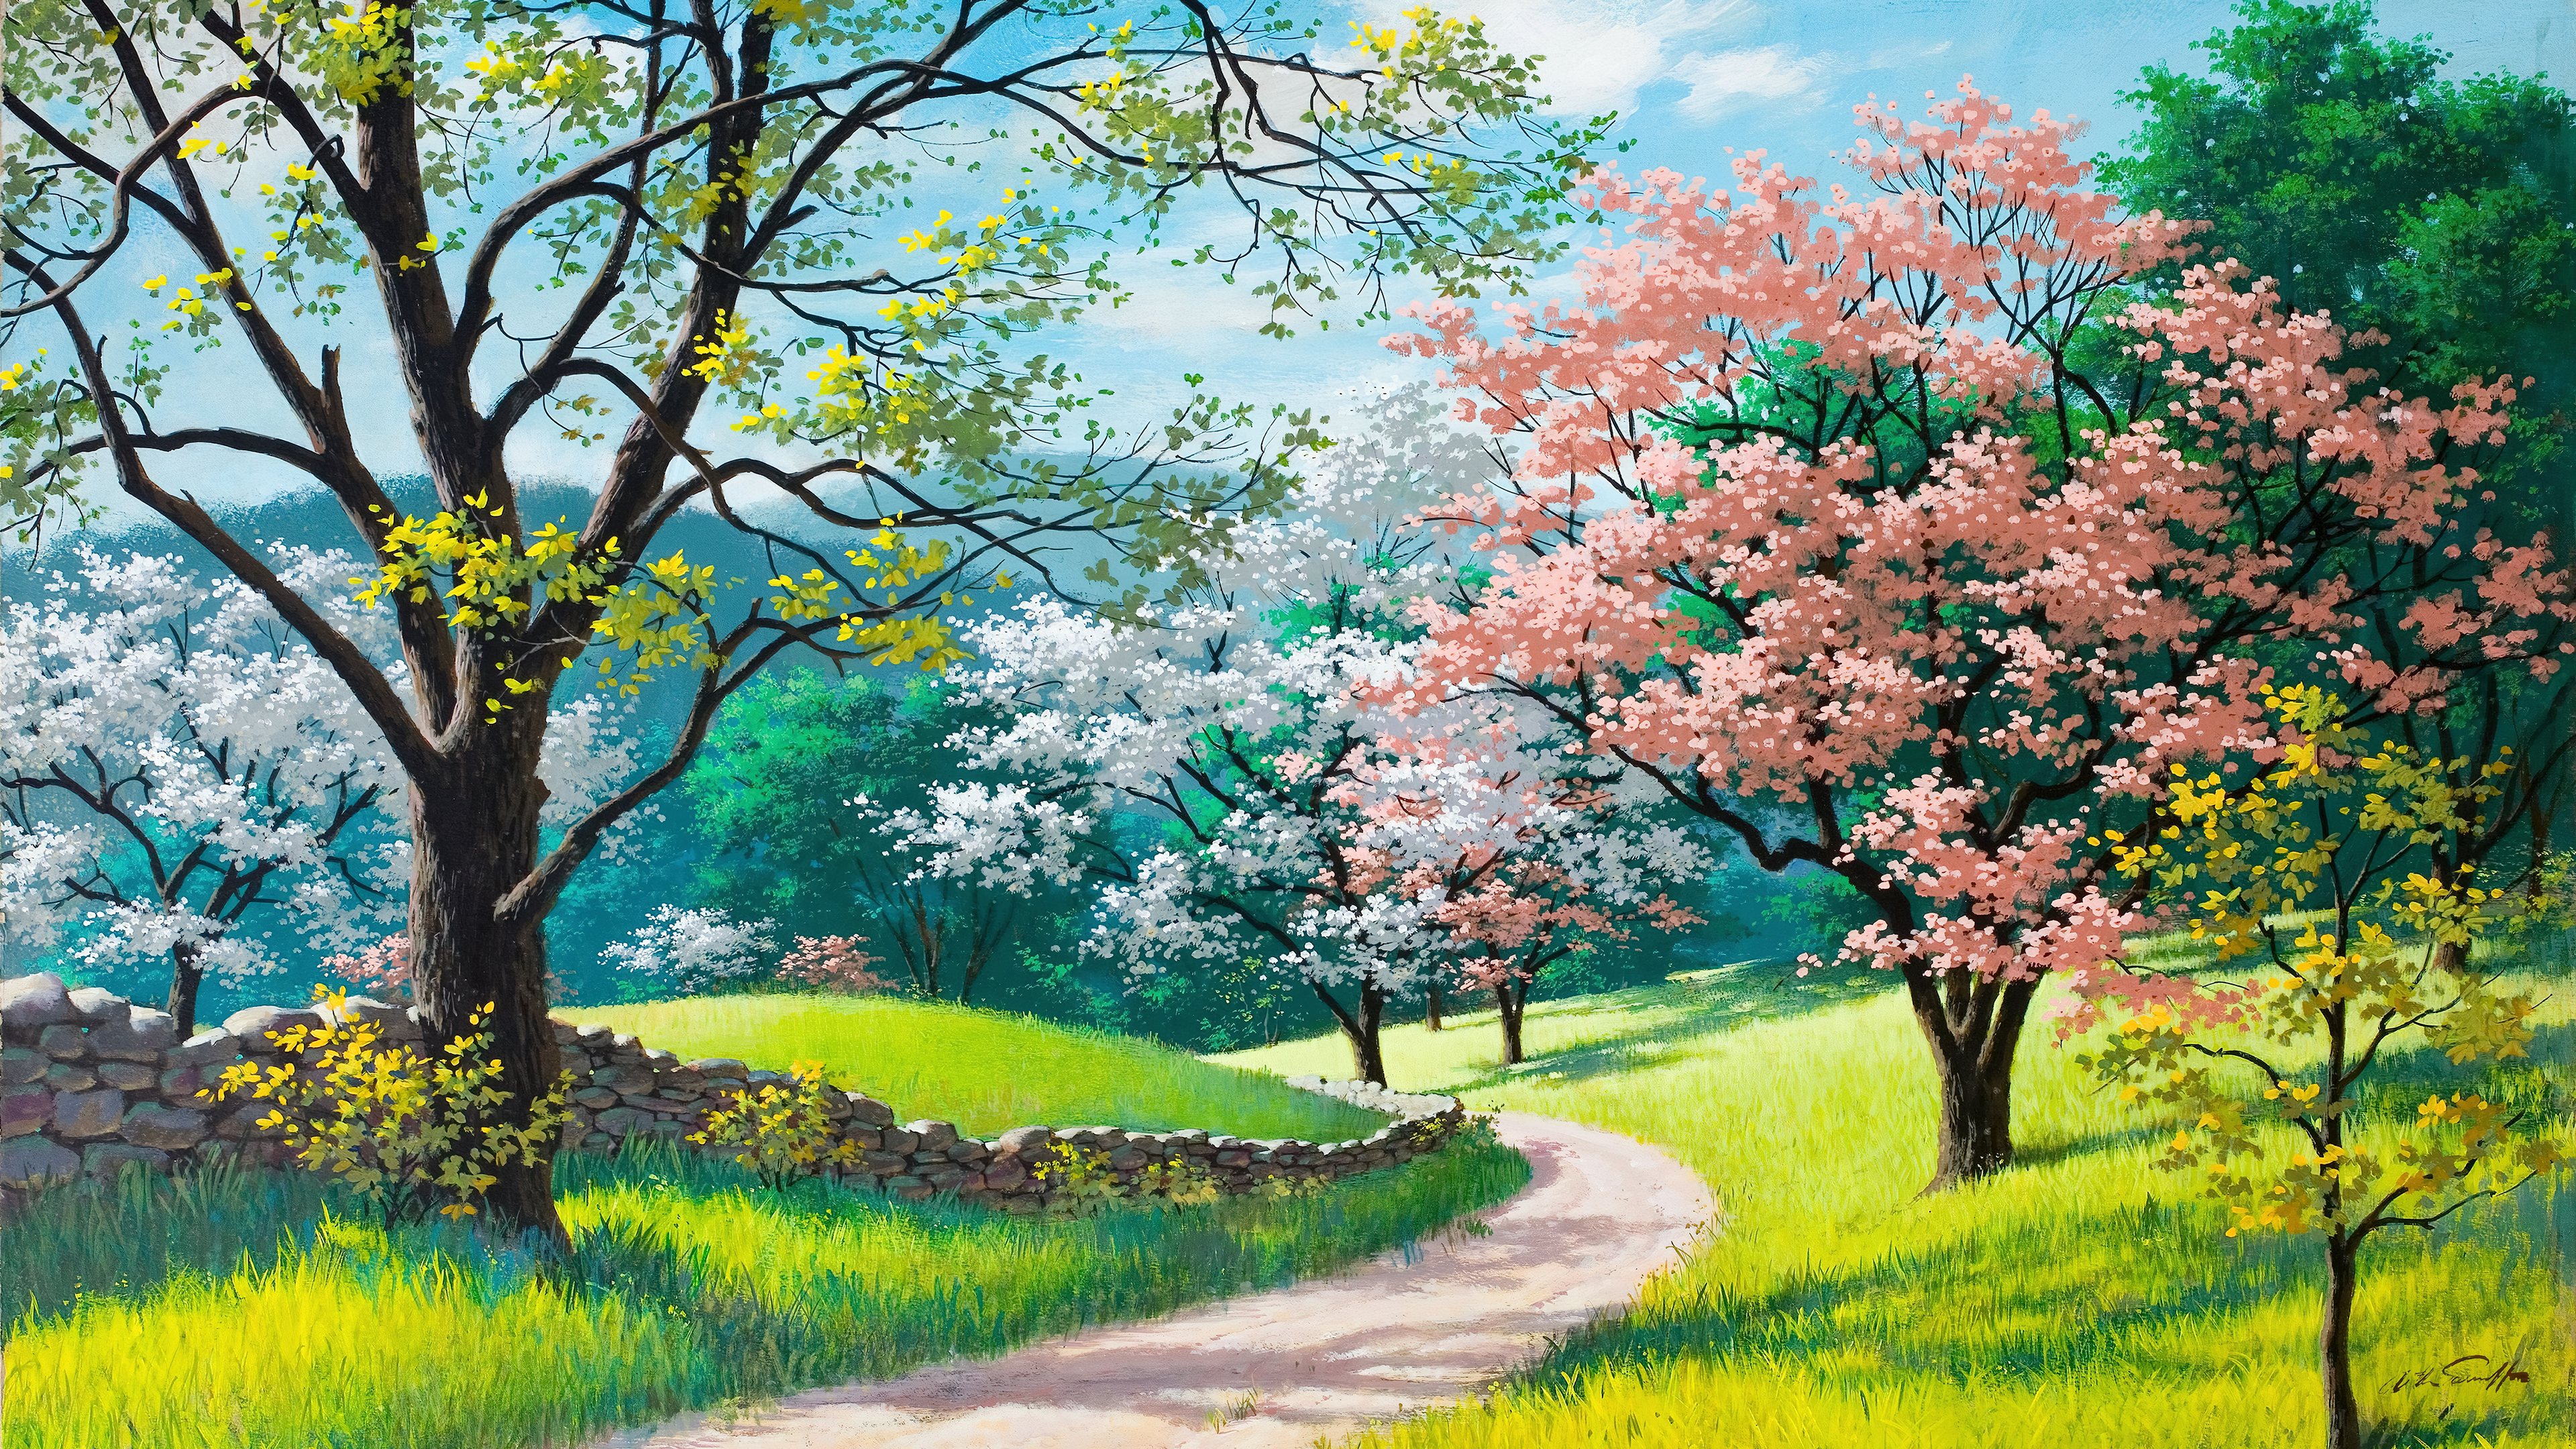 Digital Art Fantasy Art Nature Blossoms Trees Dirt Road Field Branch Spring Path Grass 3840x2160